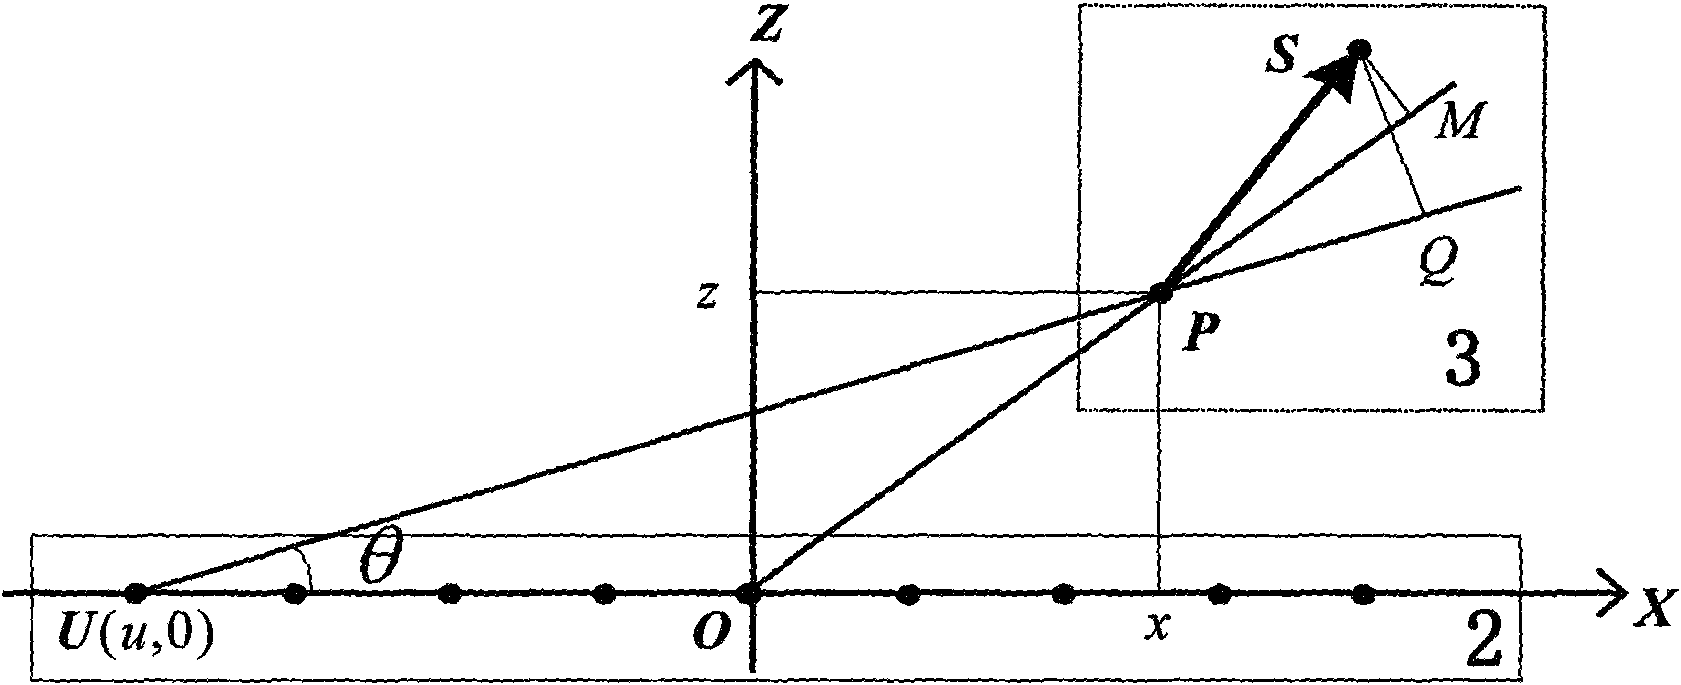 Vector measurement method of Doppler blood flow velocity by utilizing apparent displacement